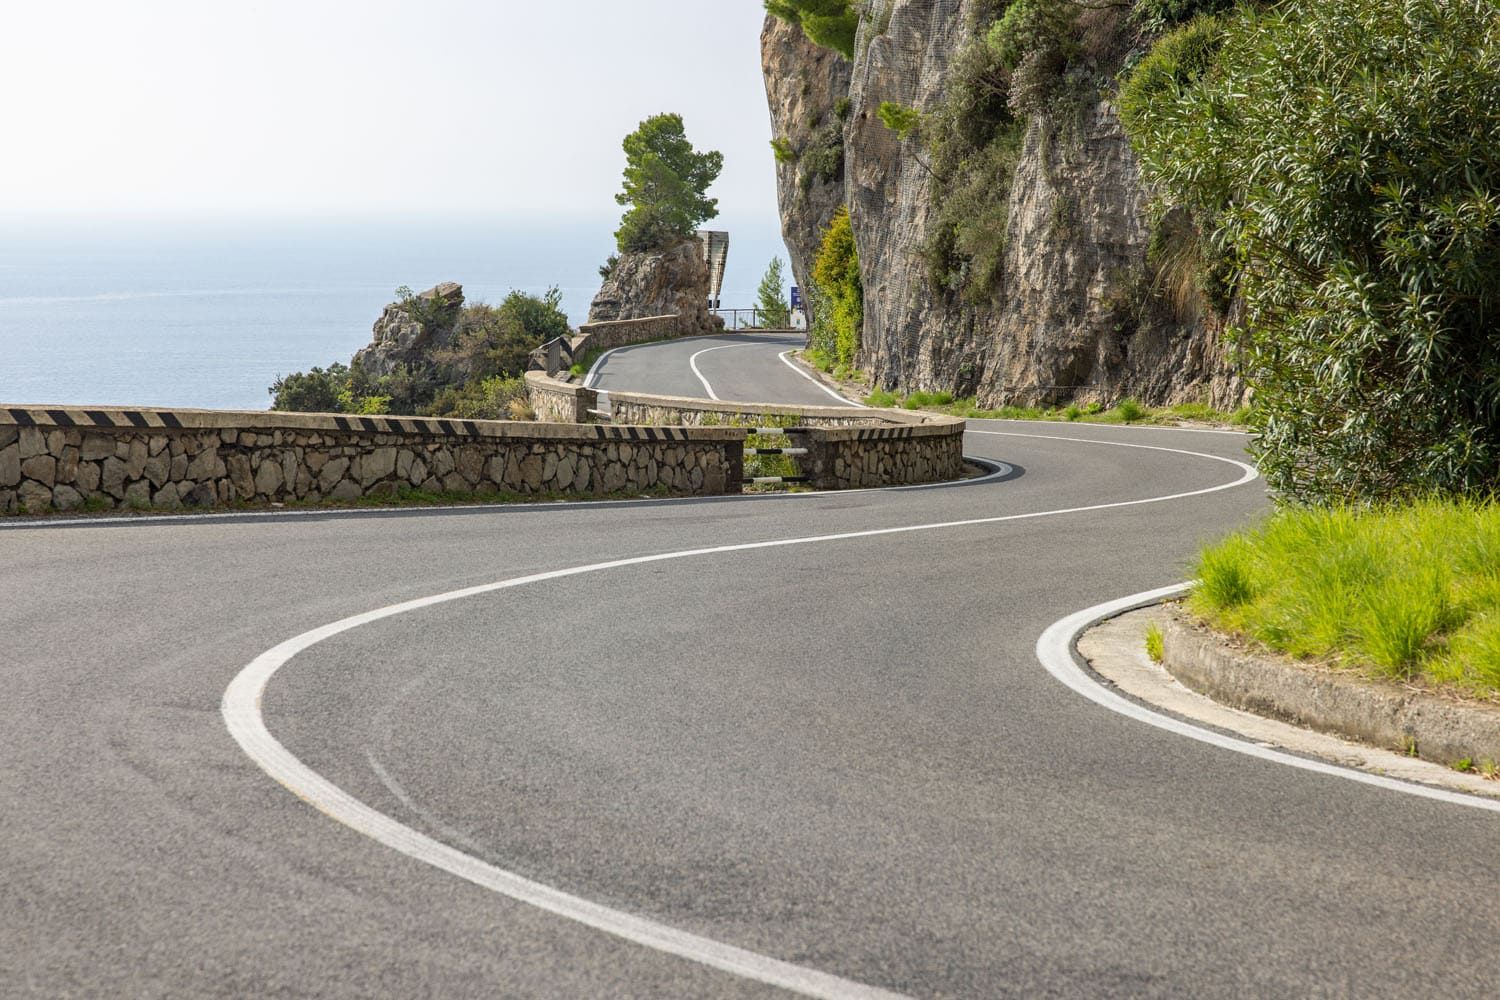 How to Drive the Amalfi Coast